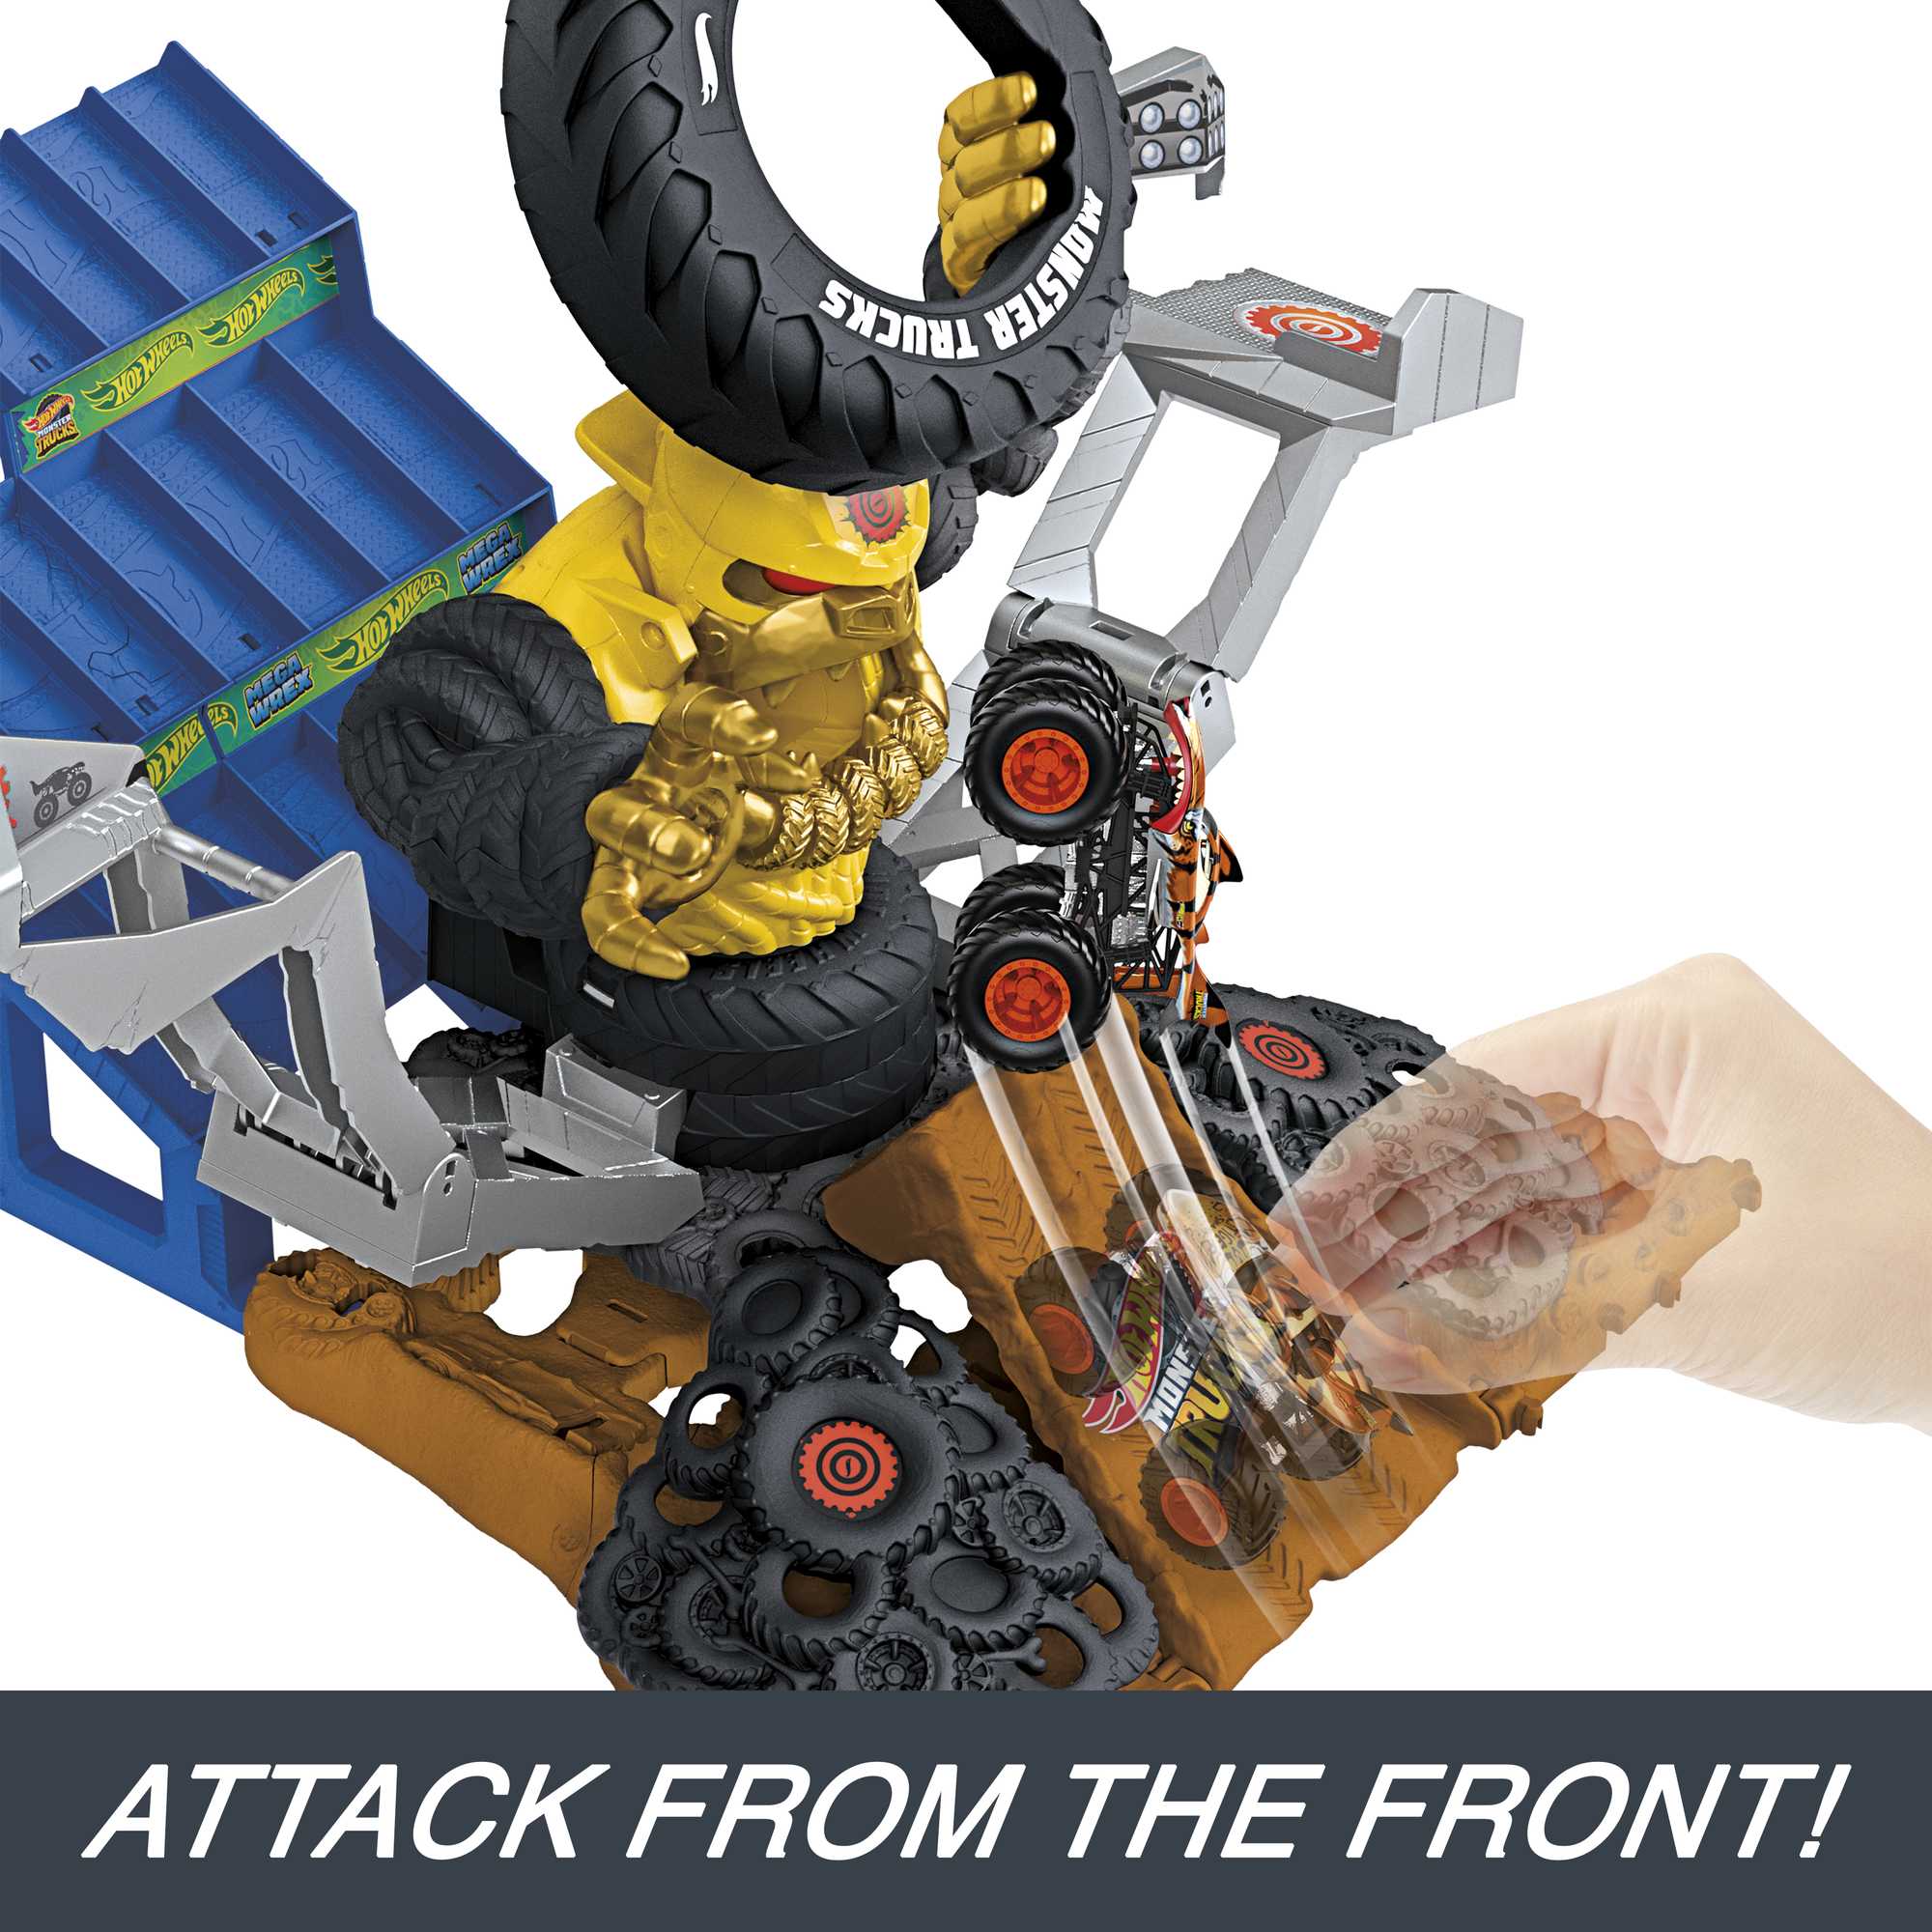 Hot Wheels Monster Trucks Arena Smashers Mega Wrex Vs Crushzilla Takedown, Cars & Trucks